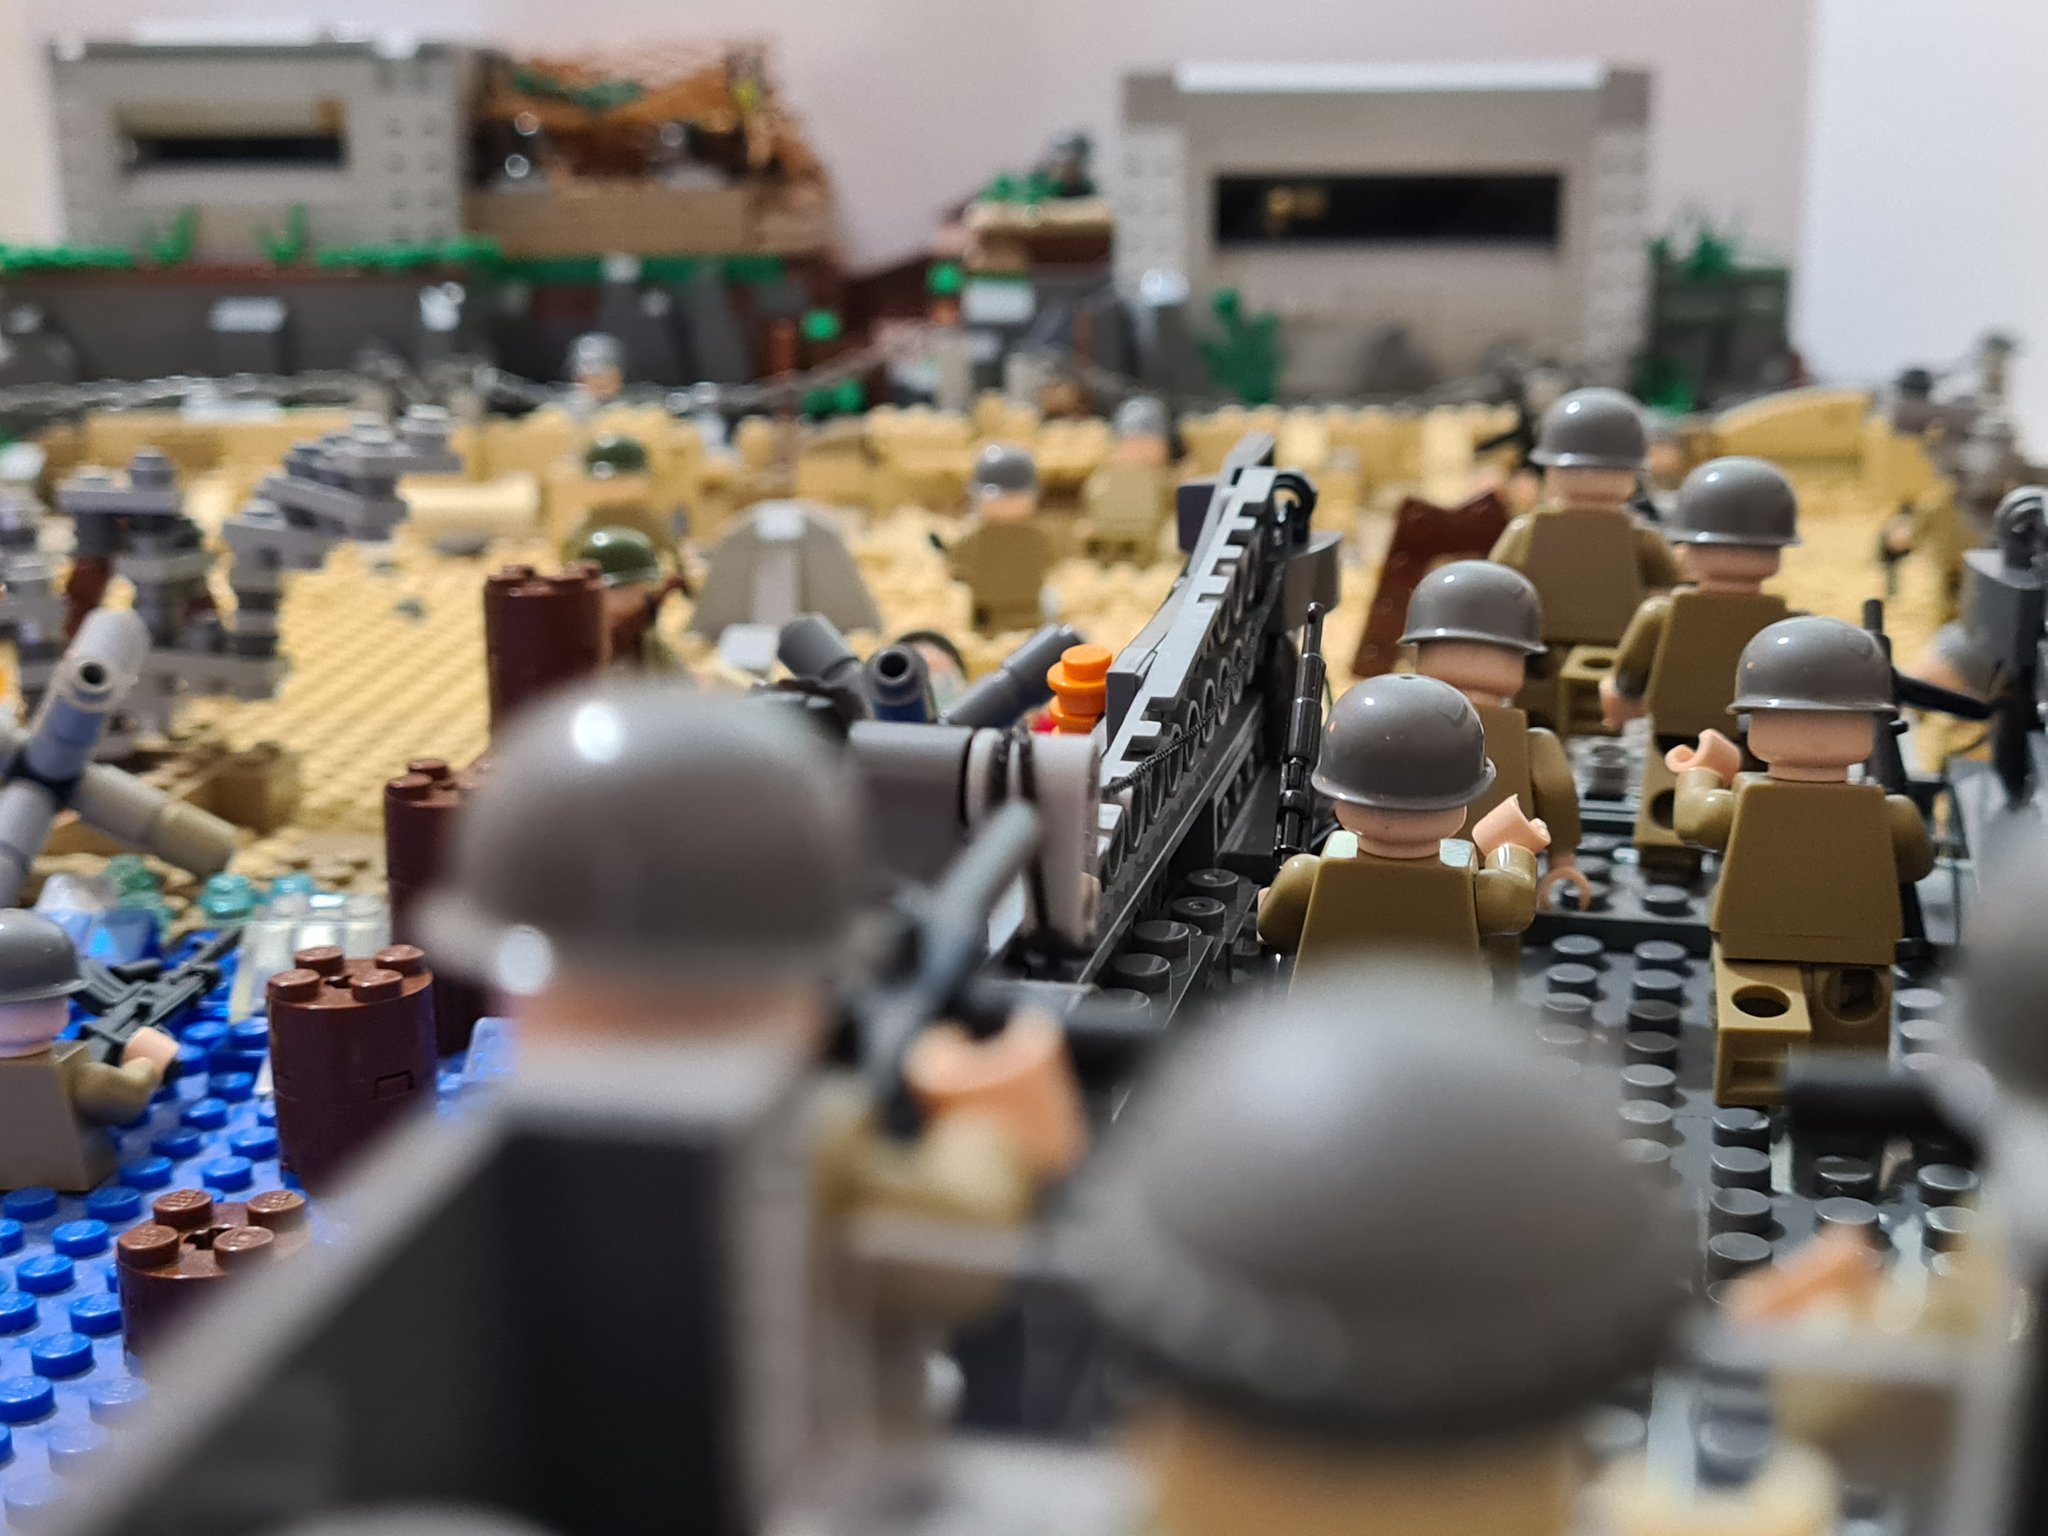 Legomatronic Twitter: "My Lego build continues #lego #DDay #WW2 https://t.co/roeXT1GdmG"